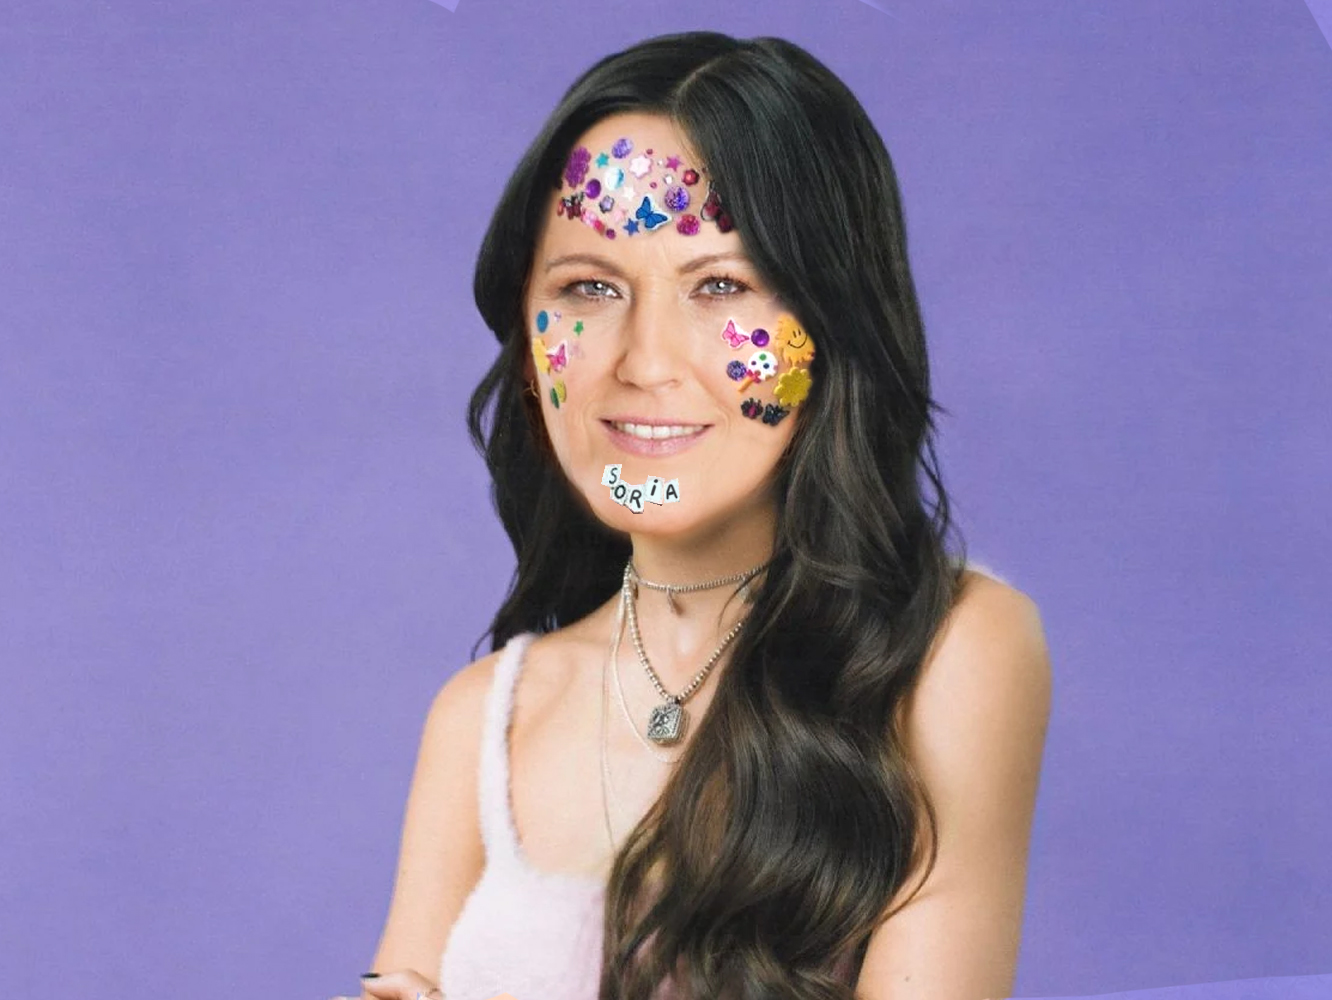  Olivia Rodrigo habla de su primer álbum, ‘Sour’, en tono boomer Cristina Soria